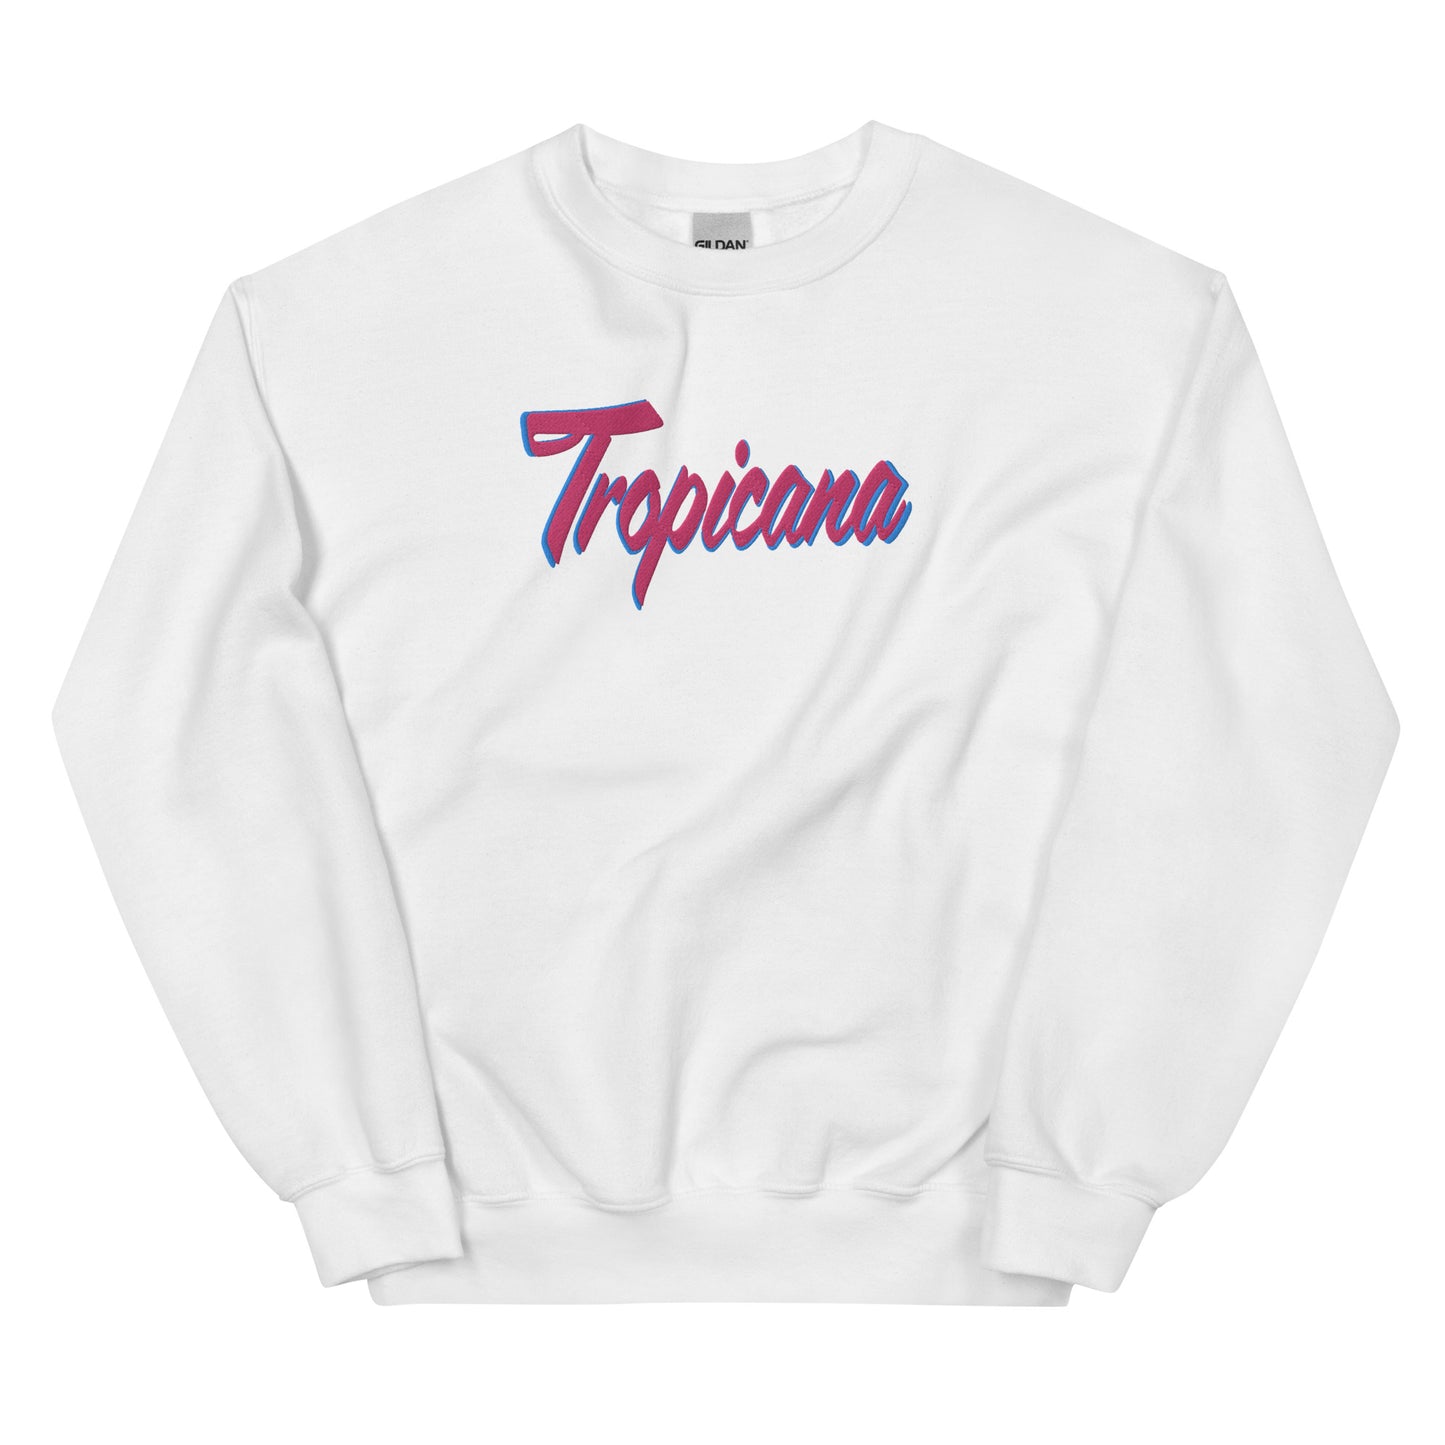 Tropicana Deco Embroidered Unisex Sweatshirt